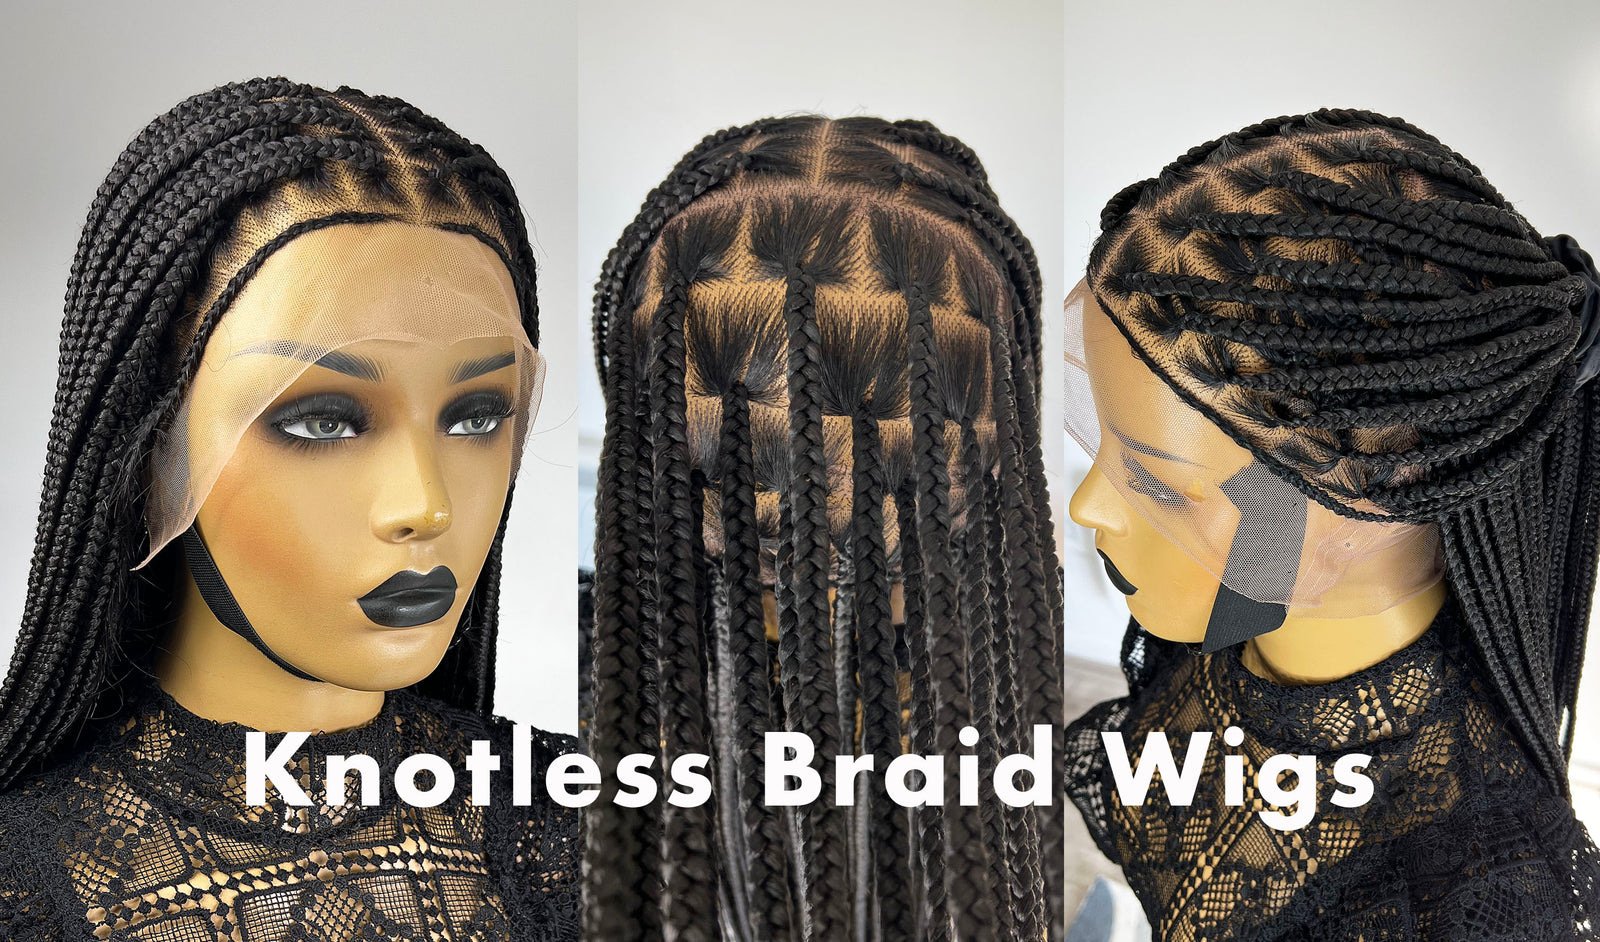 Braided wigs - Women's accessories